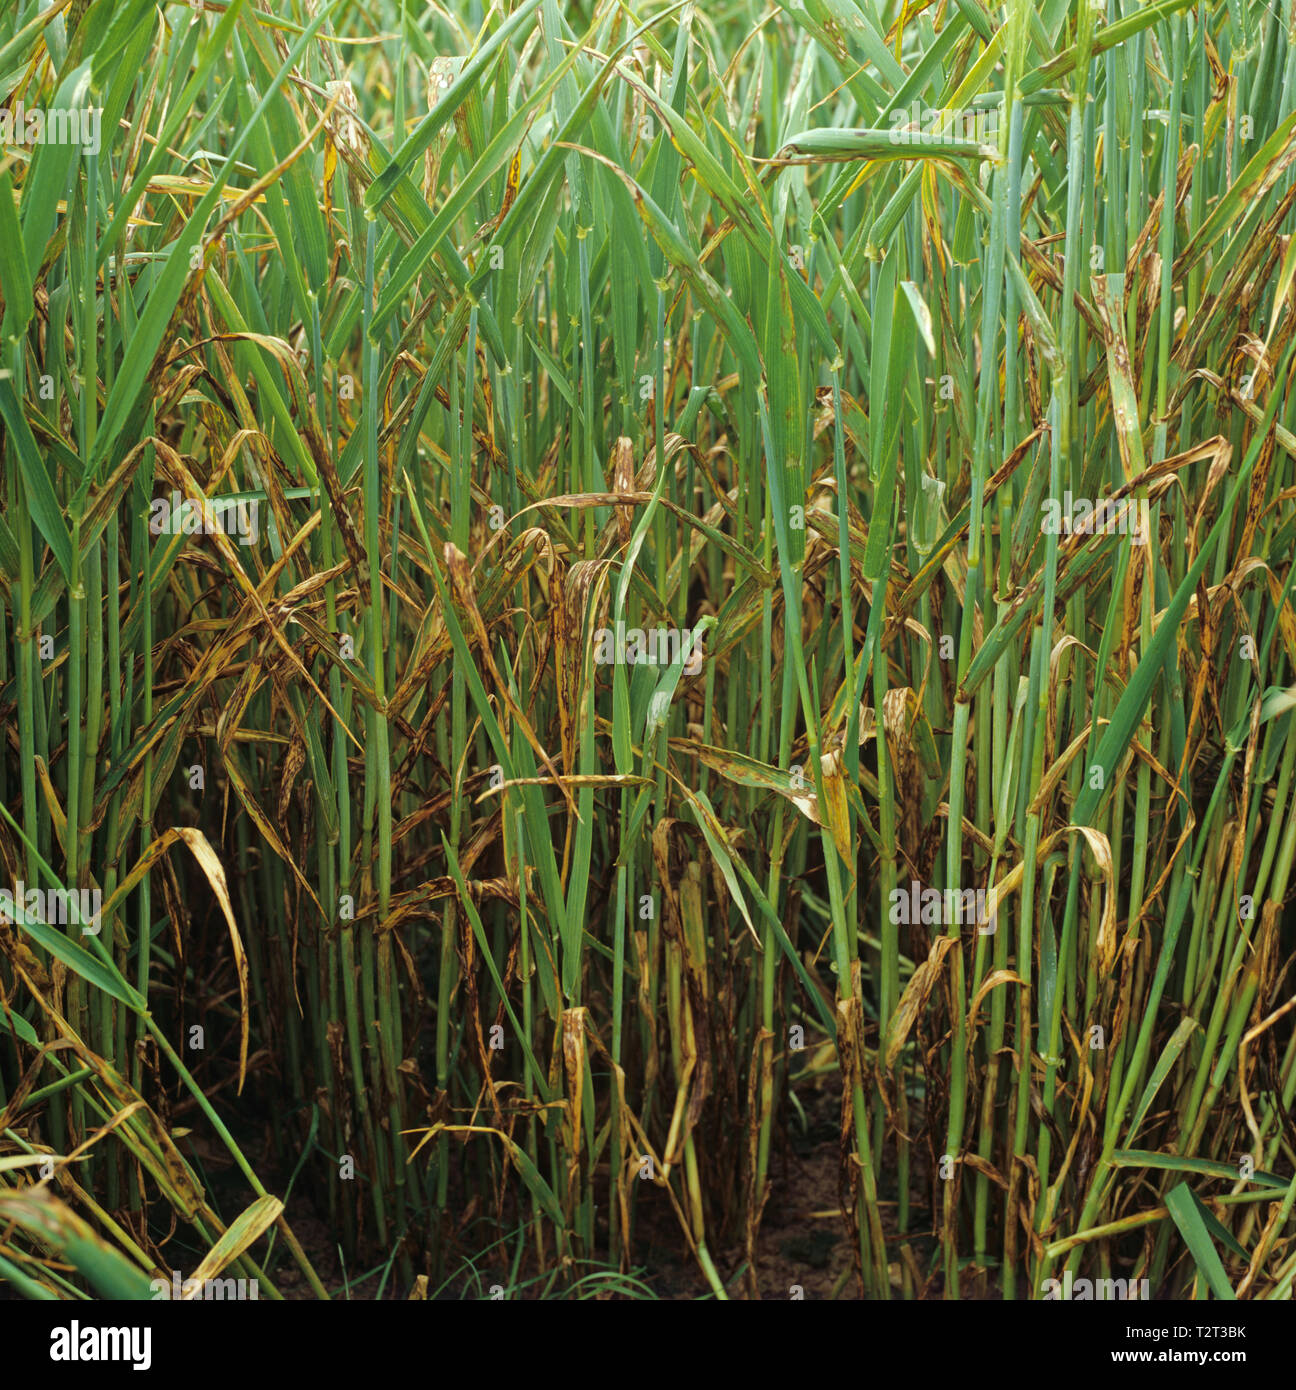 Barley leaf blotch or leaf scald (Rhynchosporium secalis) serious infection on barley crop with ear in boot Stock Photo